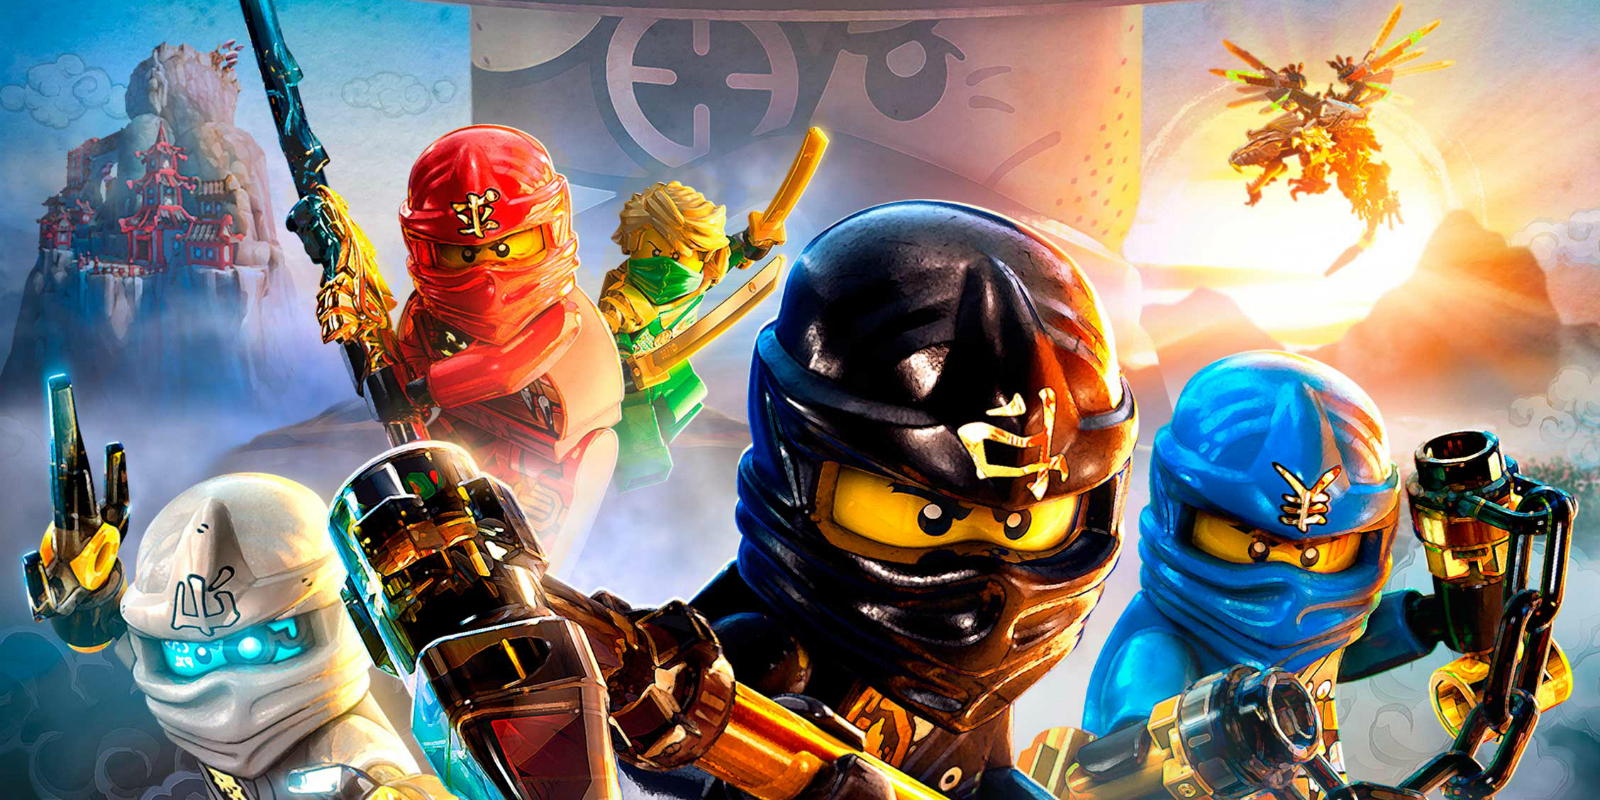 Banner Phim Phim LEGO Ninjago (The Lego Ninjago Movie)